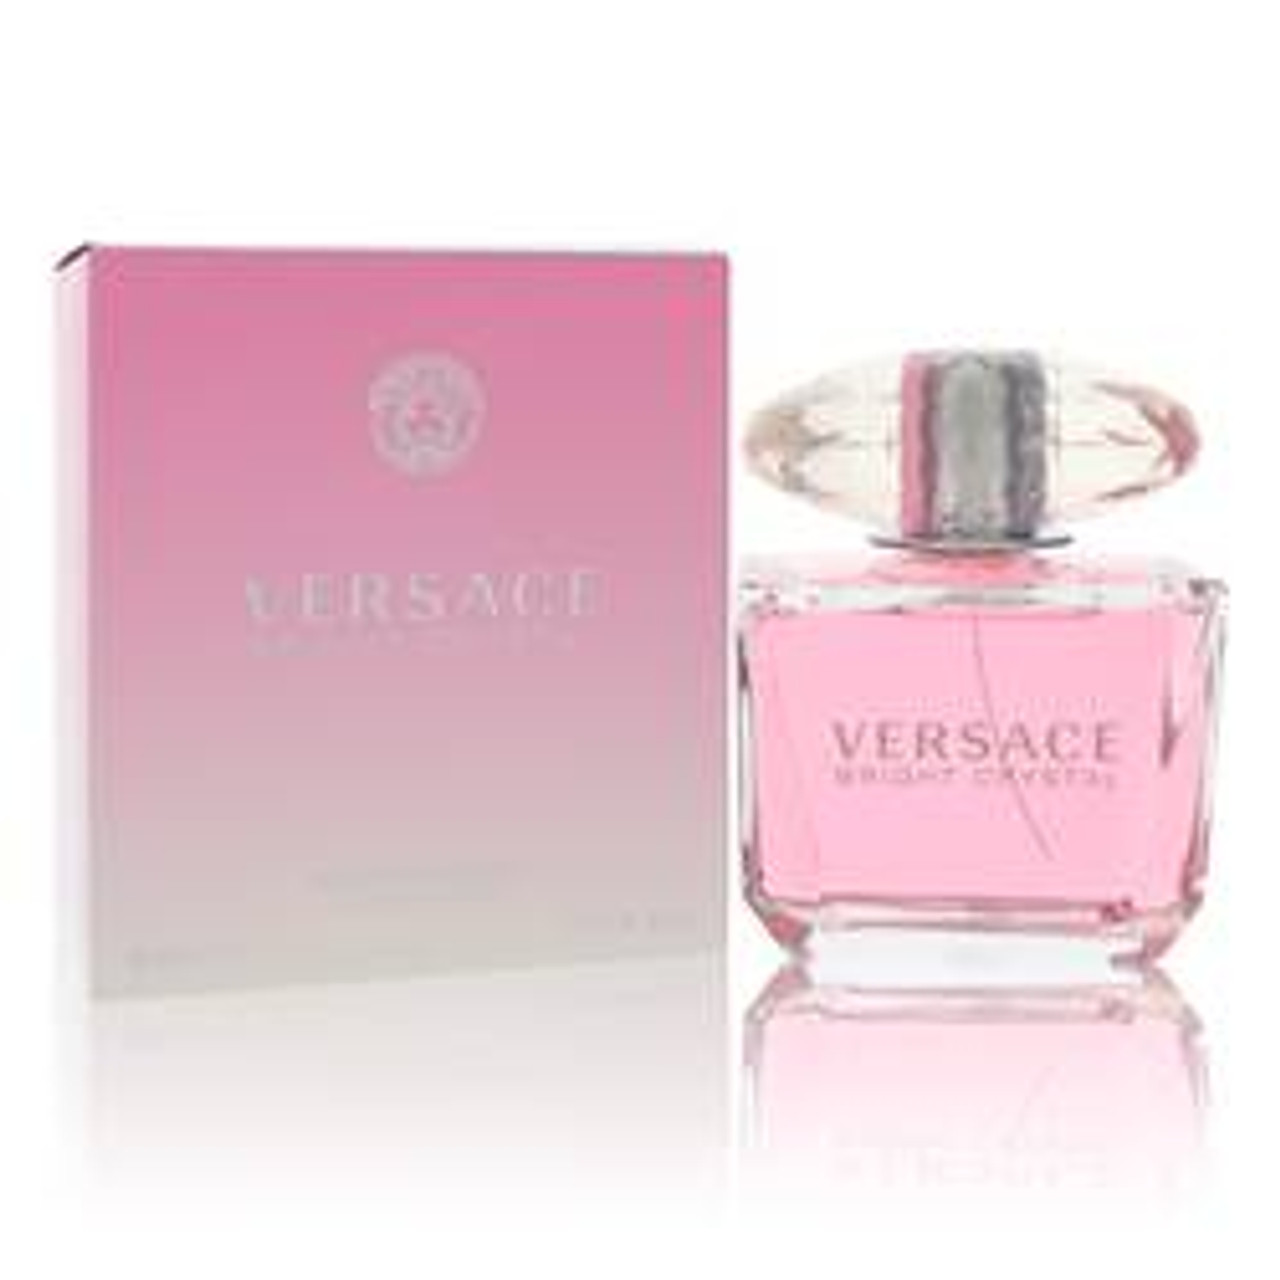 Bright Crystal Perfume By Versace Eau De Toilette Spray 6.7 oz for Women - *Pre-Order